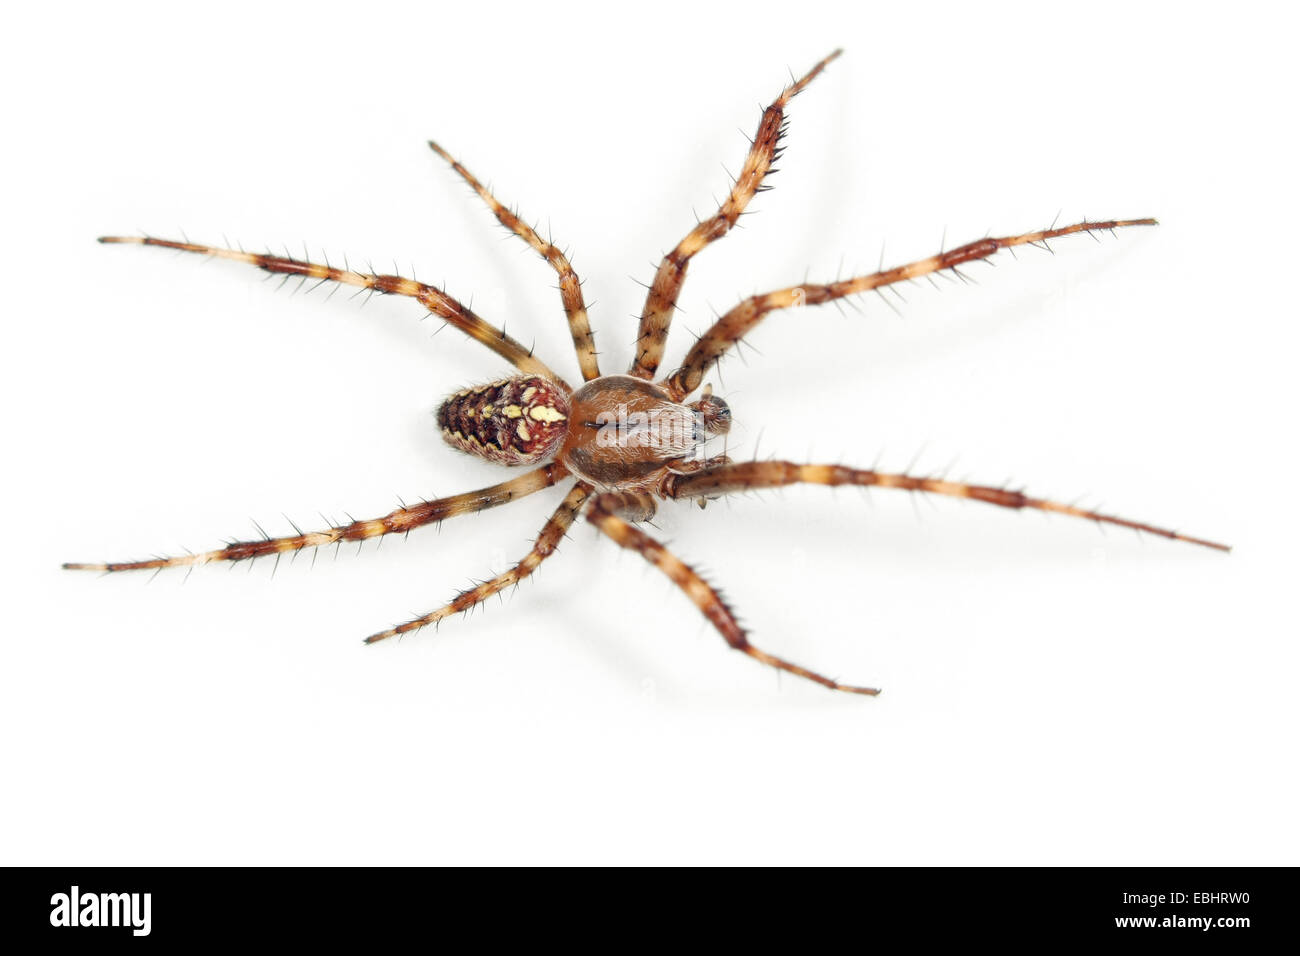 A Cross spider, or Garden Spider (Araneus quadratus) on white background. Cross spiders are part of the family Araneidae - Orbweavers. Stock Photo